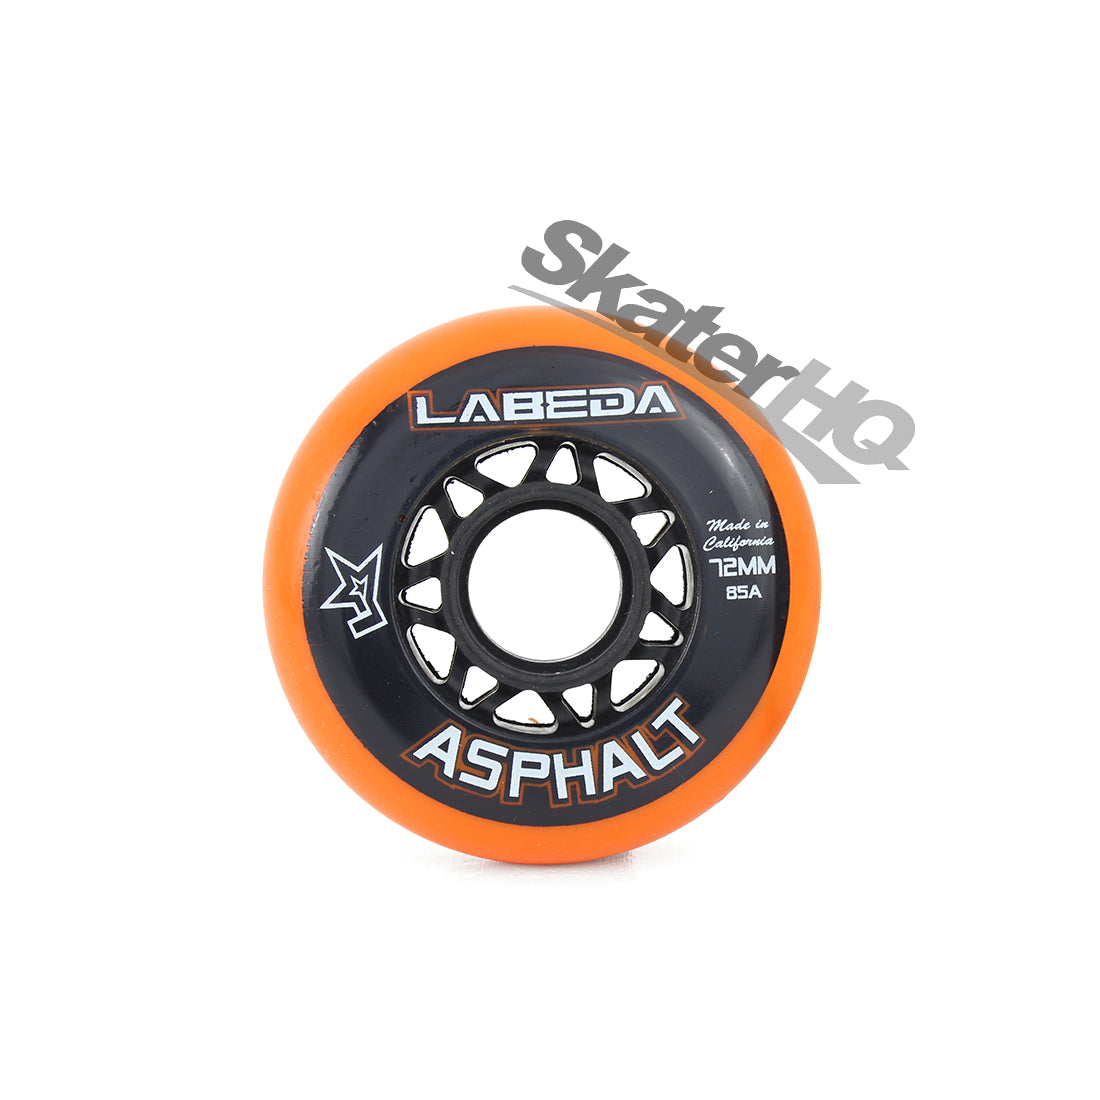 Labeda Asphalt 72mm/85A - Single Inline Rec Wheels